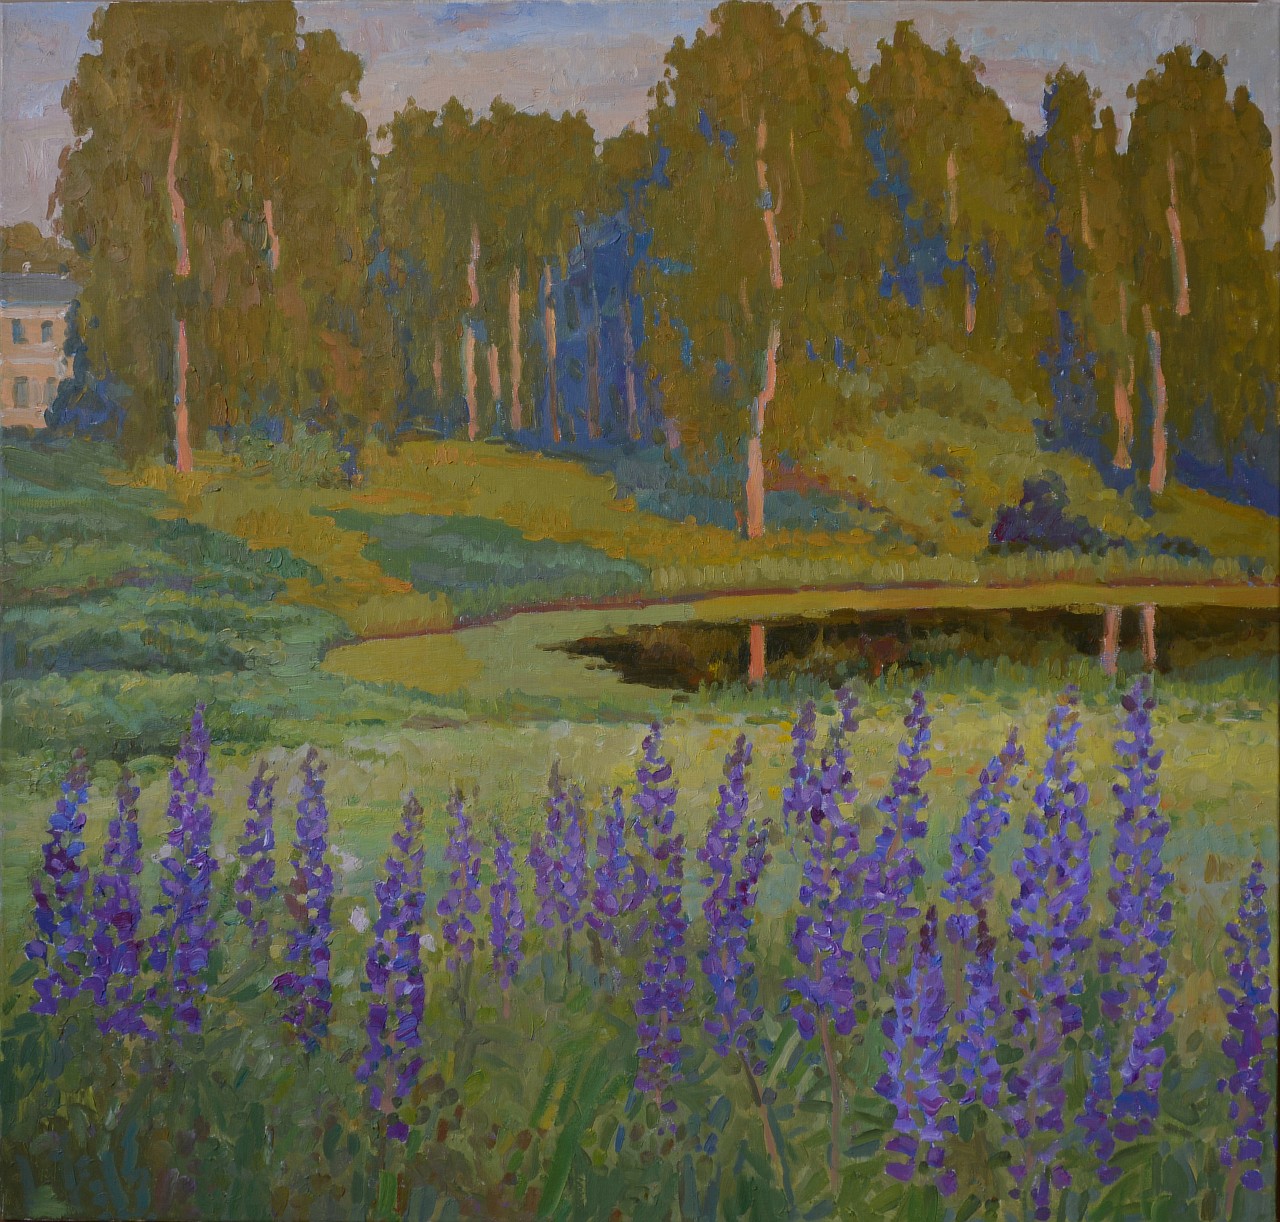  - 1, Anastasia Nesterova, Buy the painting Oil